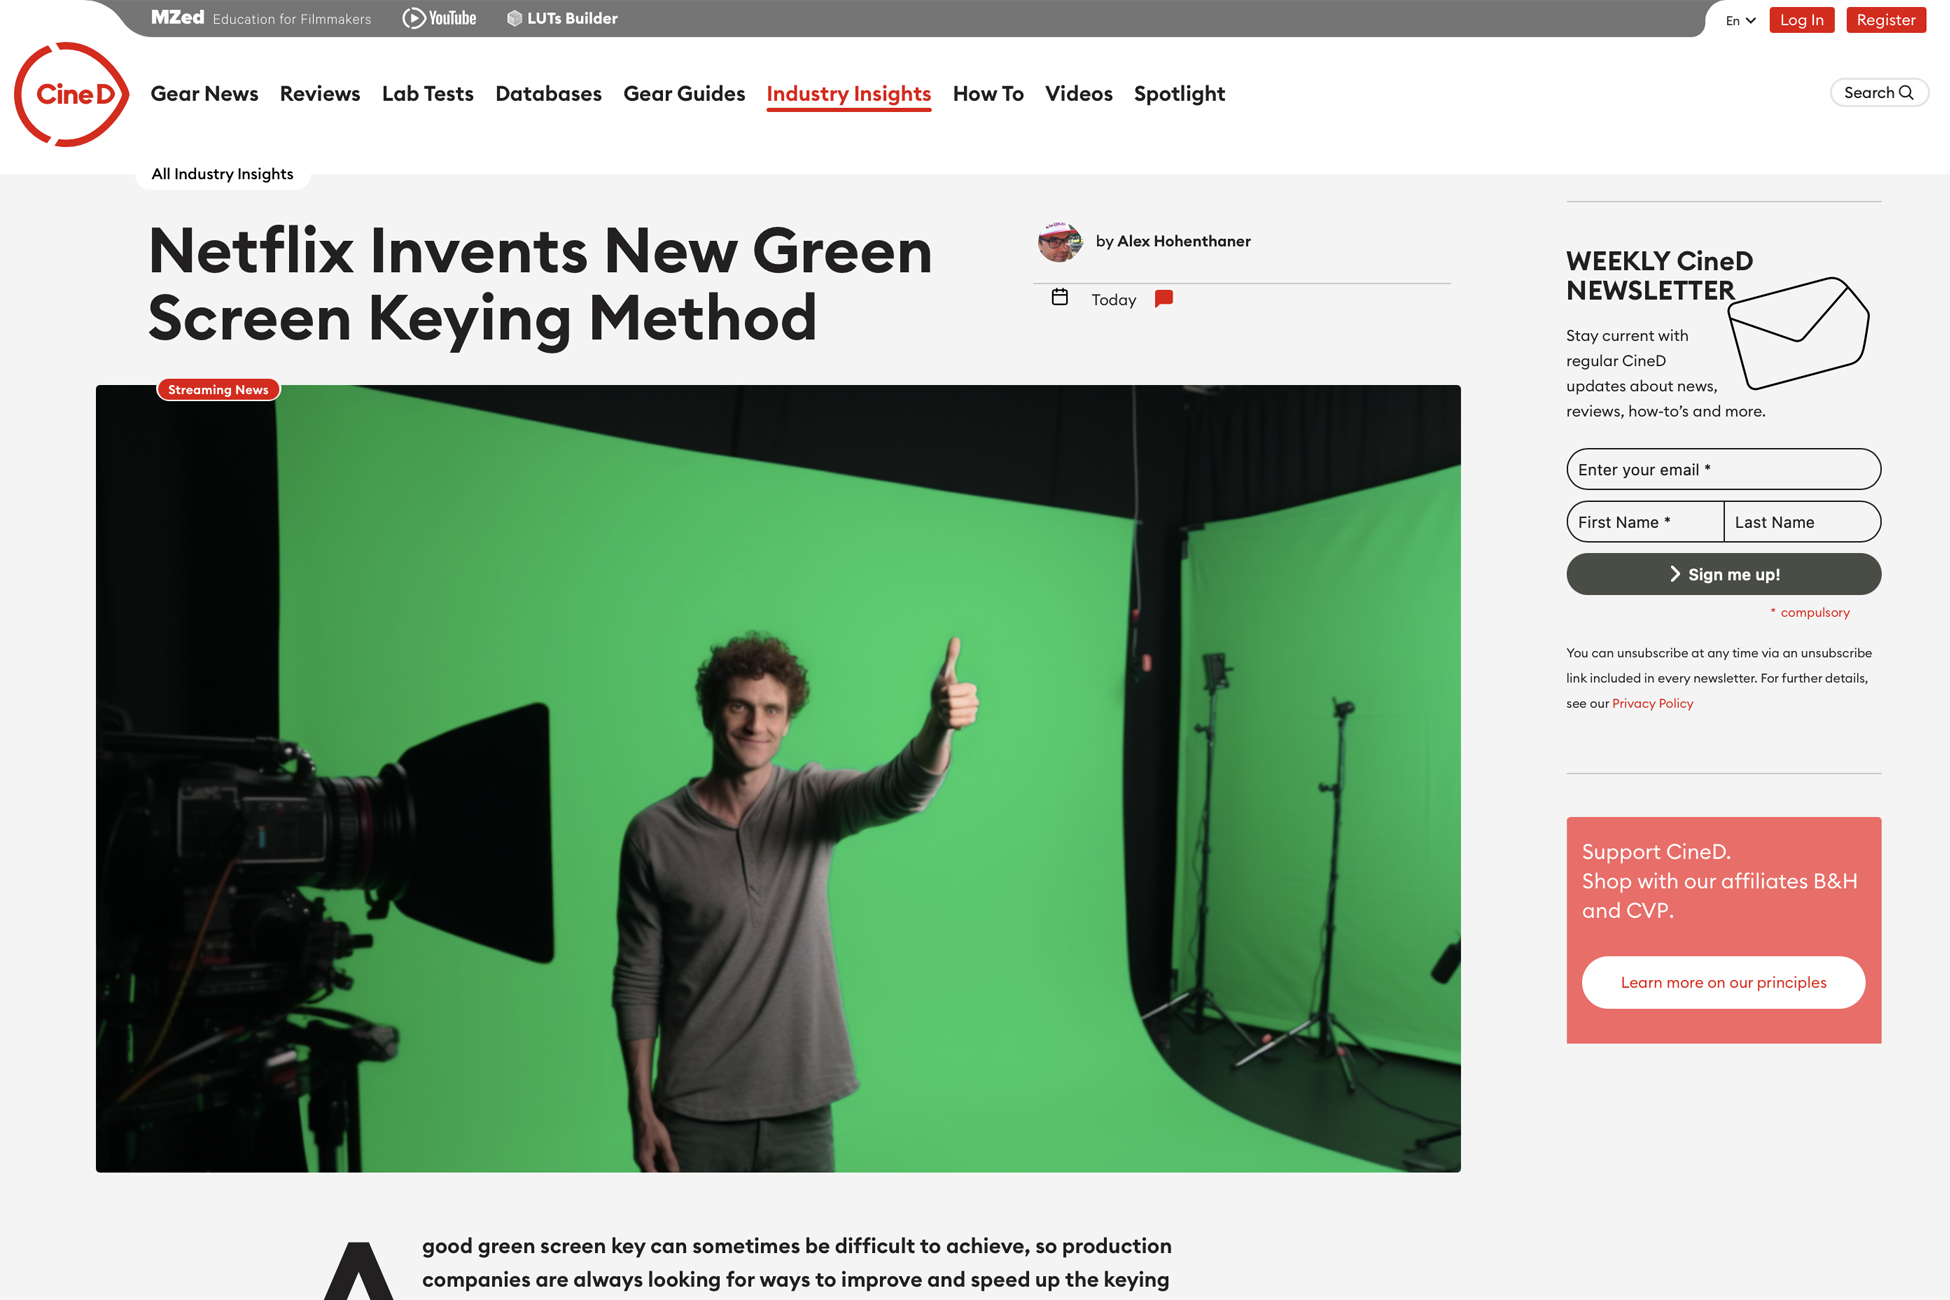 Netflix Invents New Green Screen Keying Method